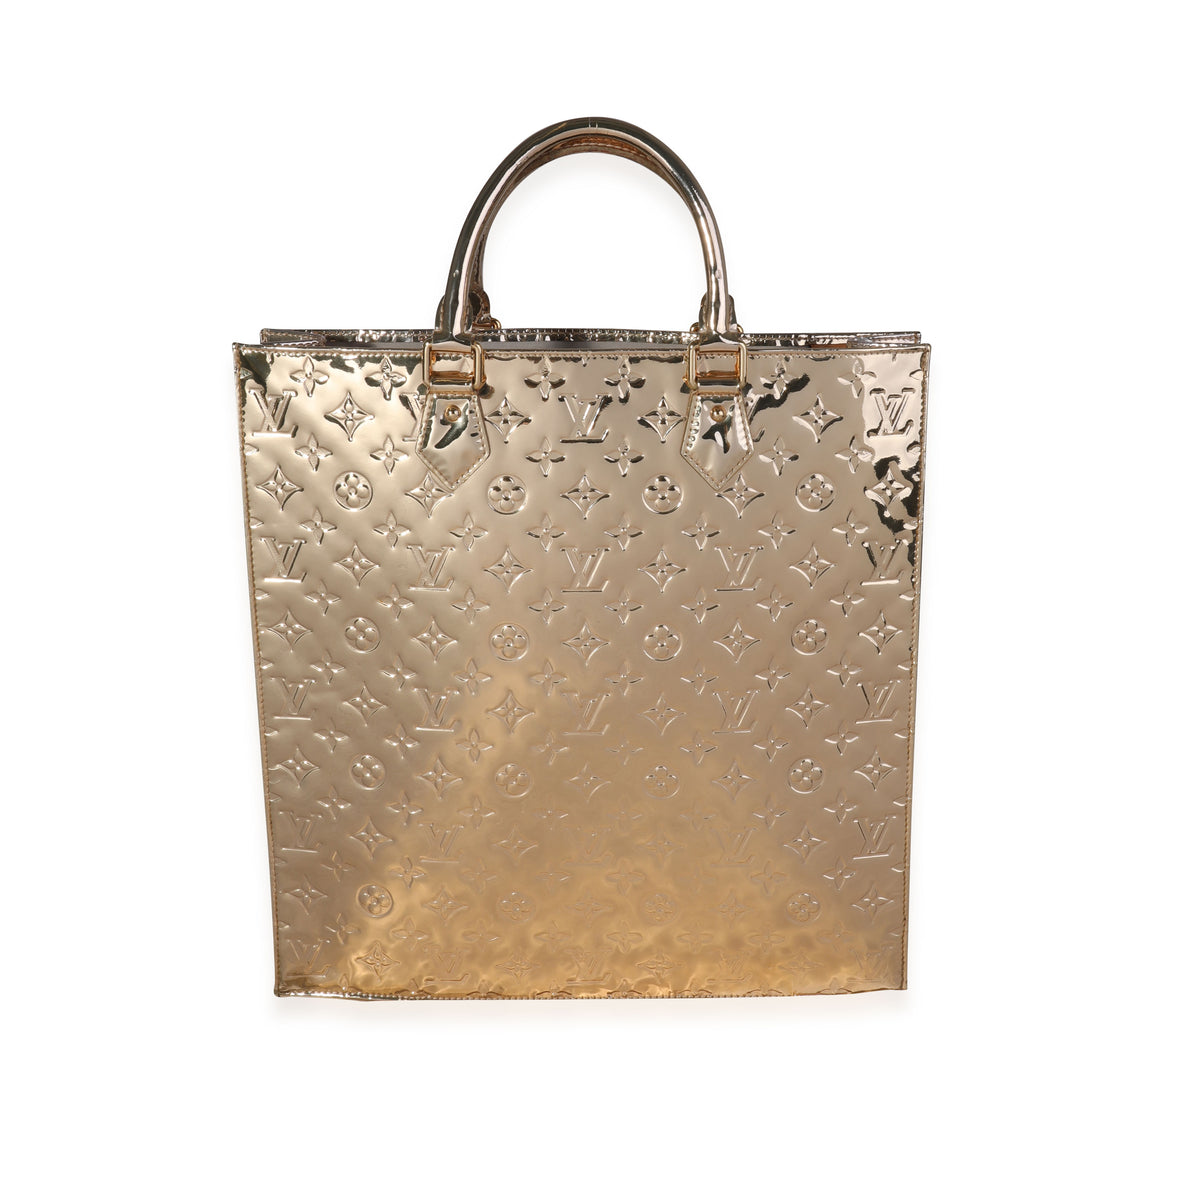 Exclusive Louis Vuitton Monogram Miroir Sac Plat bags now on sale